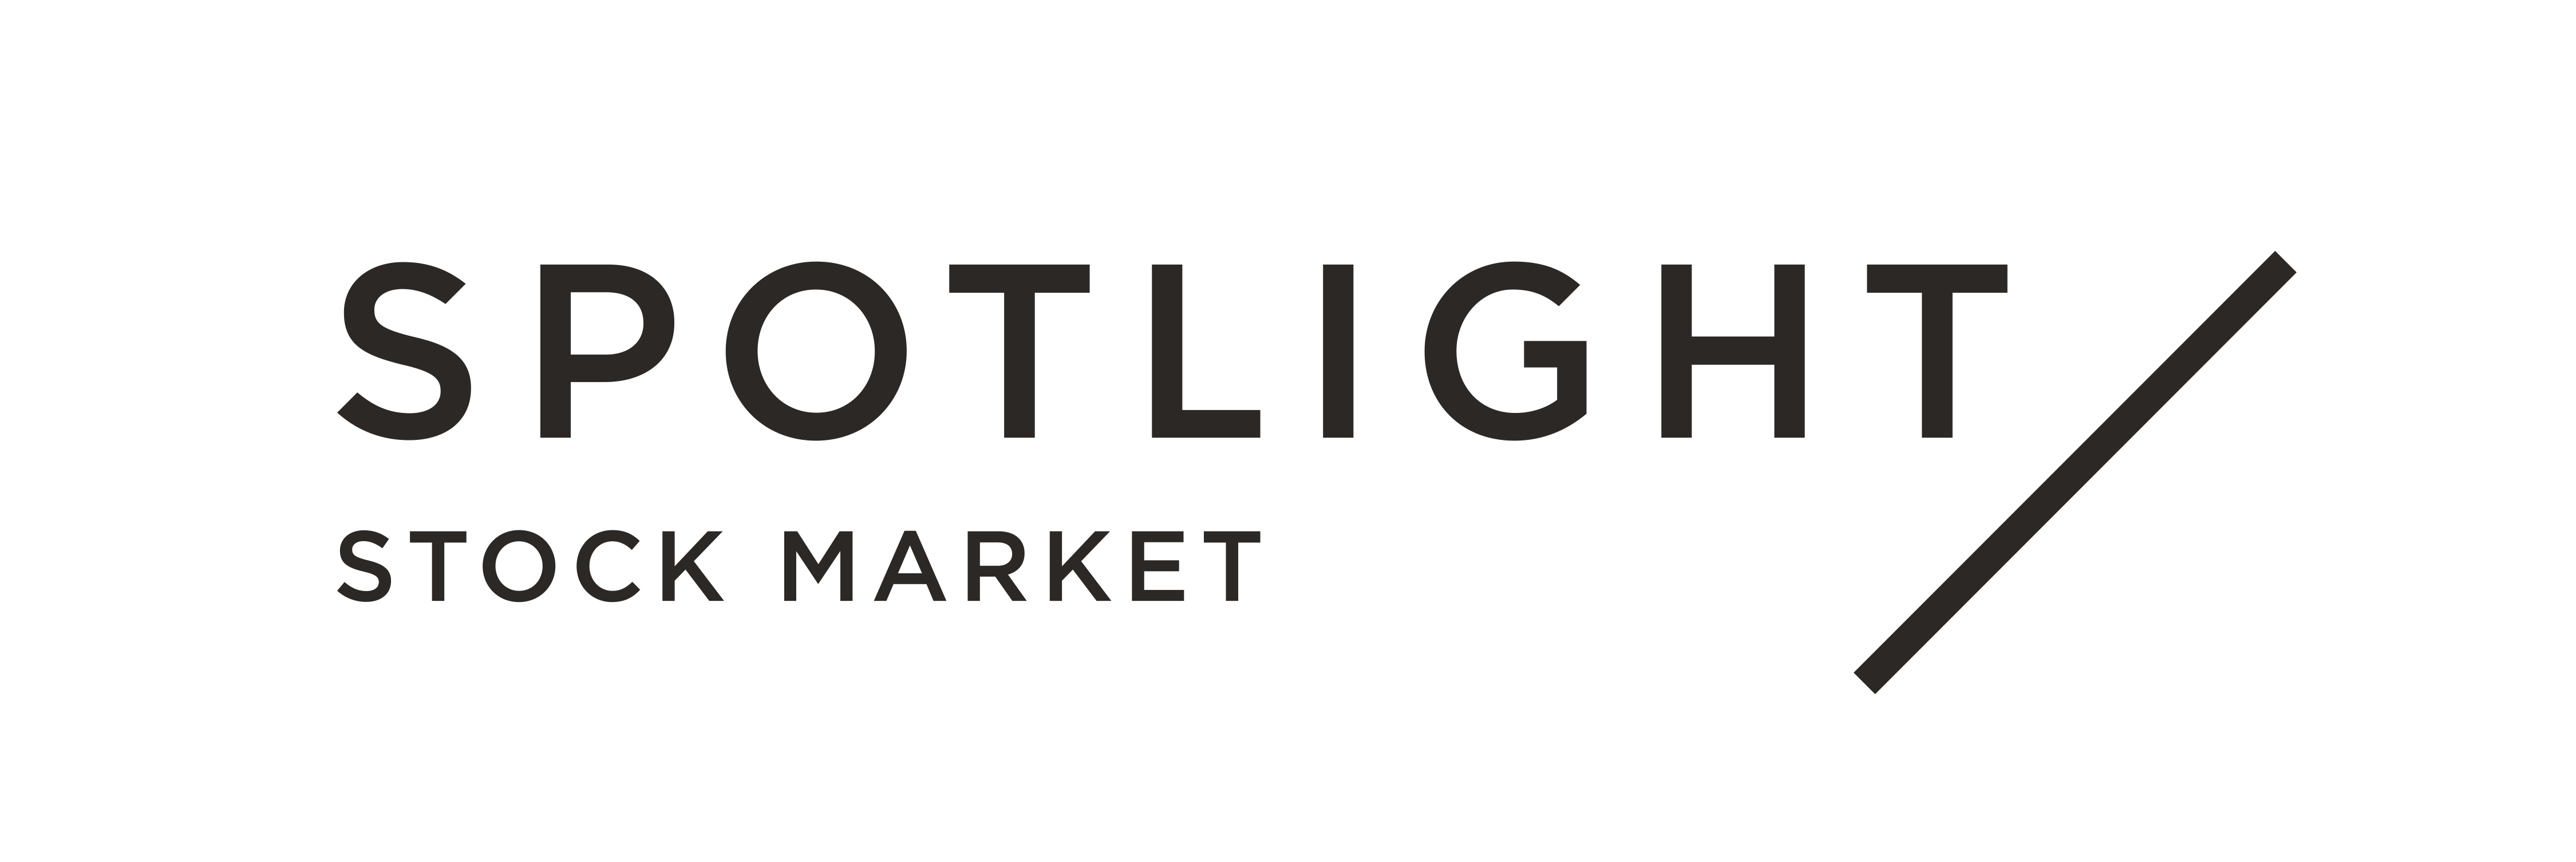 Spotlight Sm Logo Pos Rgb